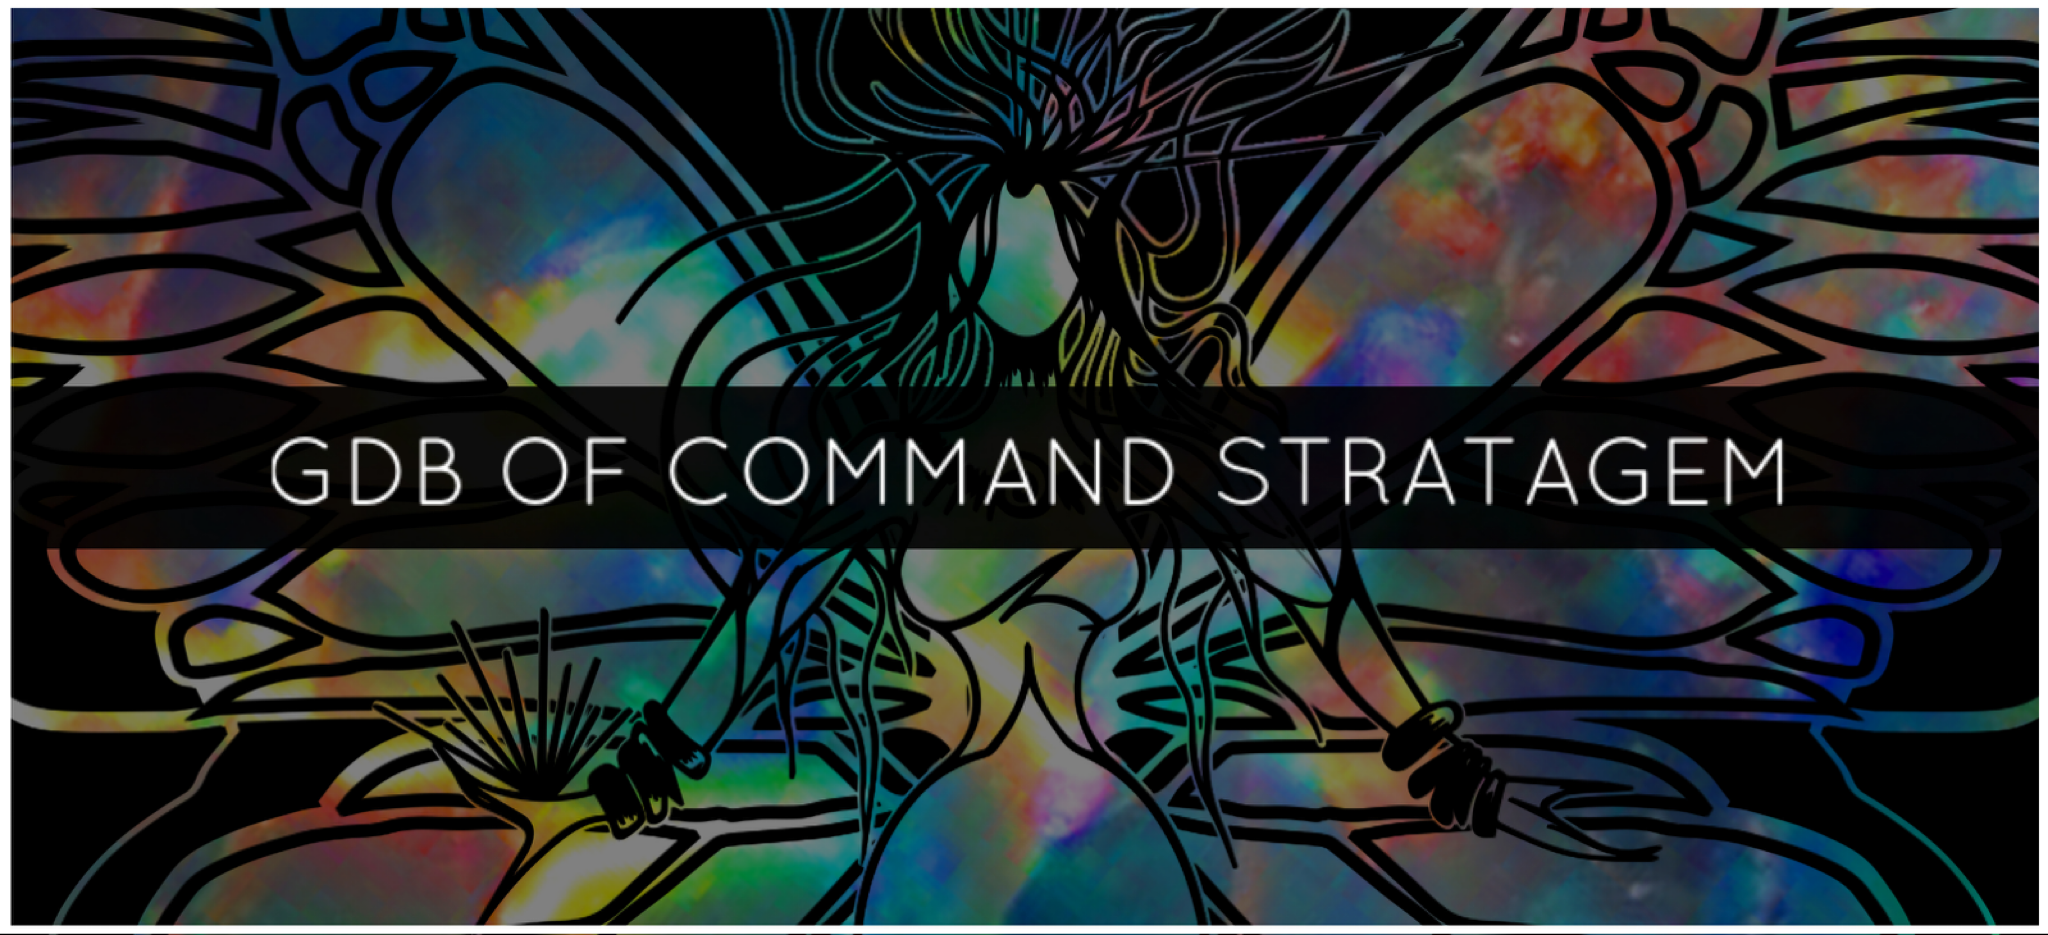 GDB OF COMMAND STRATAGEM